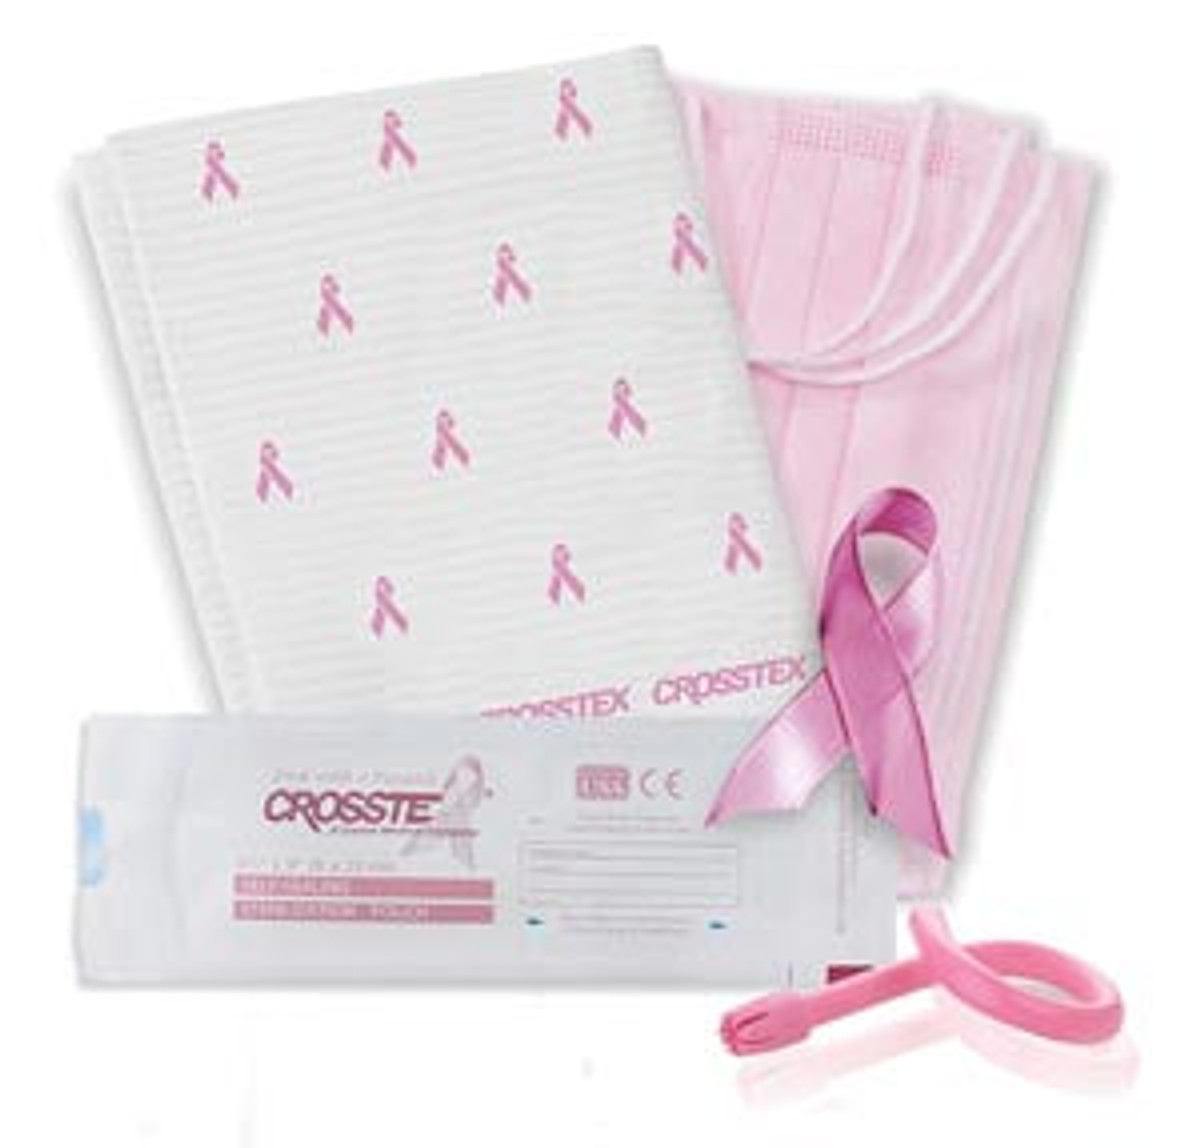 Crosstex Duo Check Sterilization Pouches, Pink With A Purpose